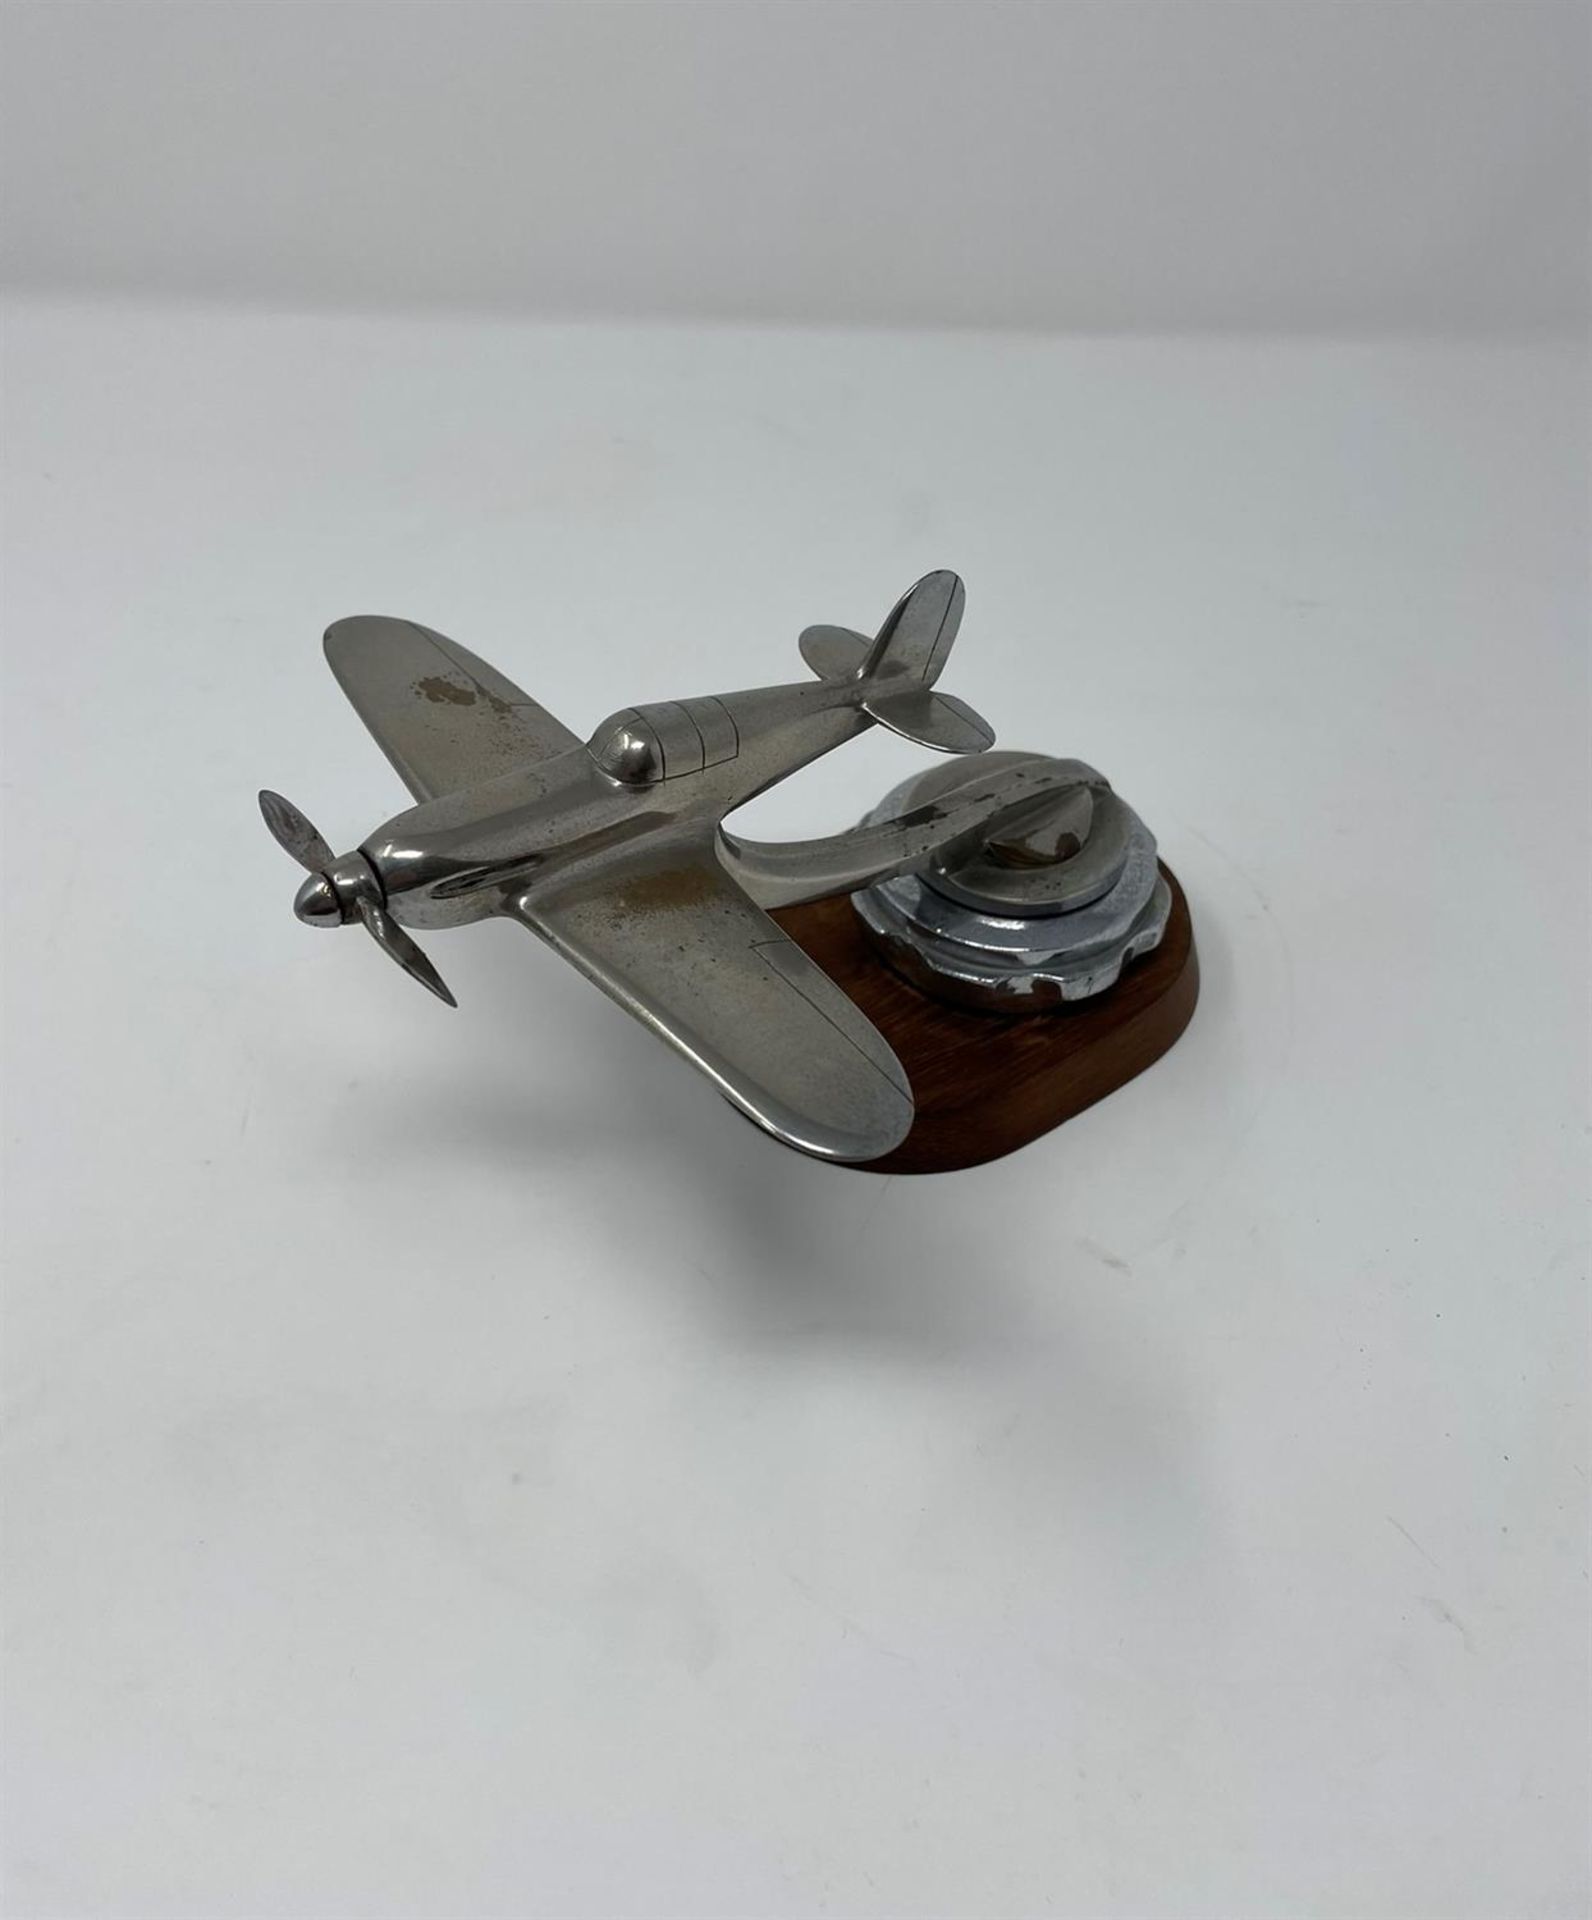 Aeroplane Car Mascot c1940s - Image 2 of 5